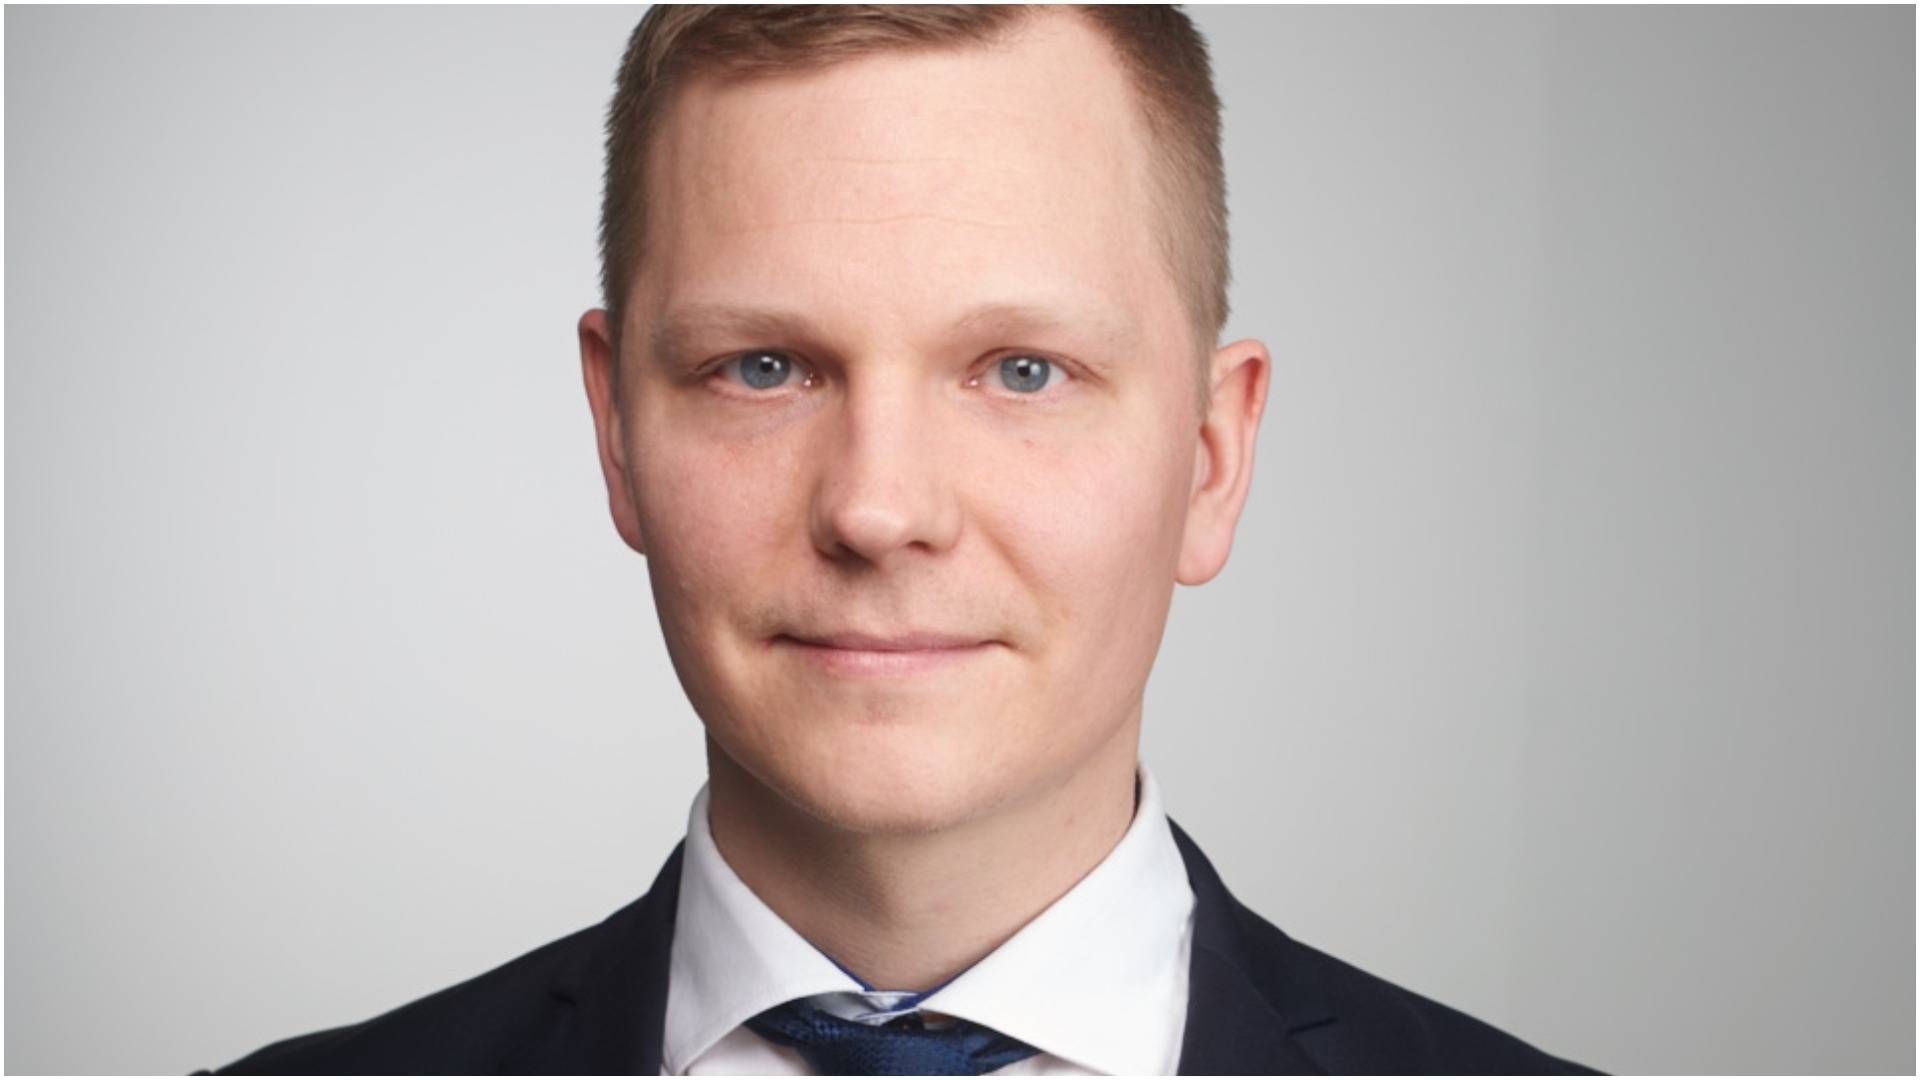 Wilhelm Schauman, BlackRock's Head of Institutional Sales, iShares ETF's, Nordic Region. | Photo: BlackRock PR.